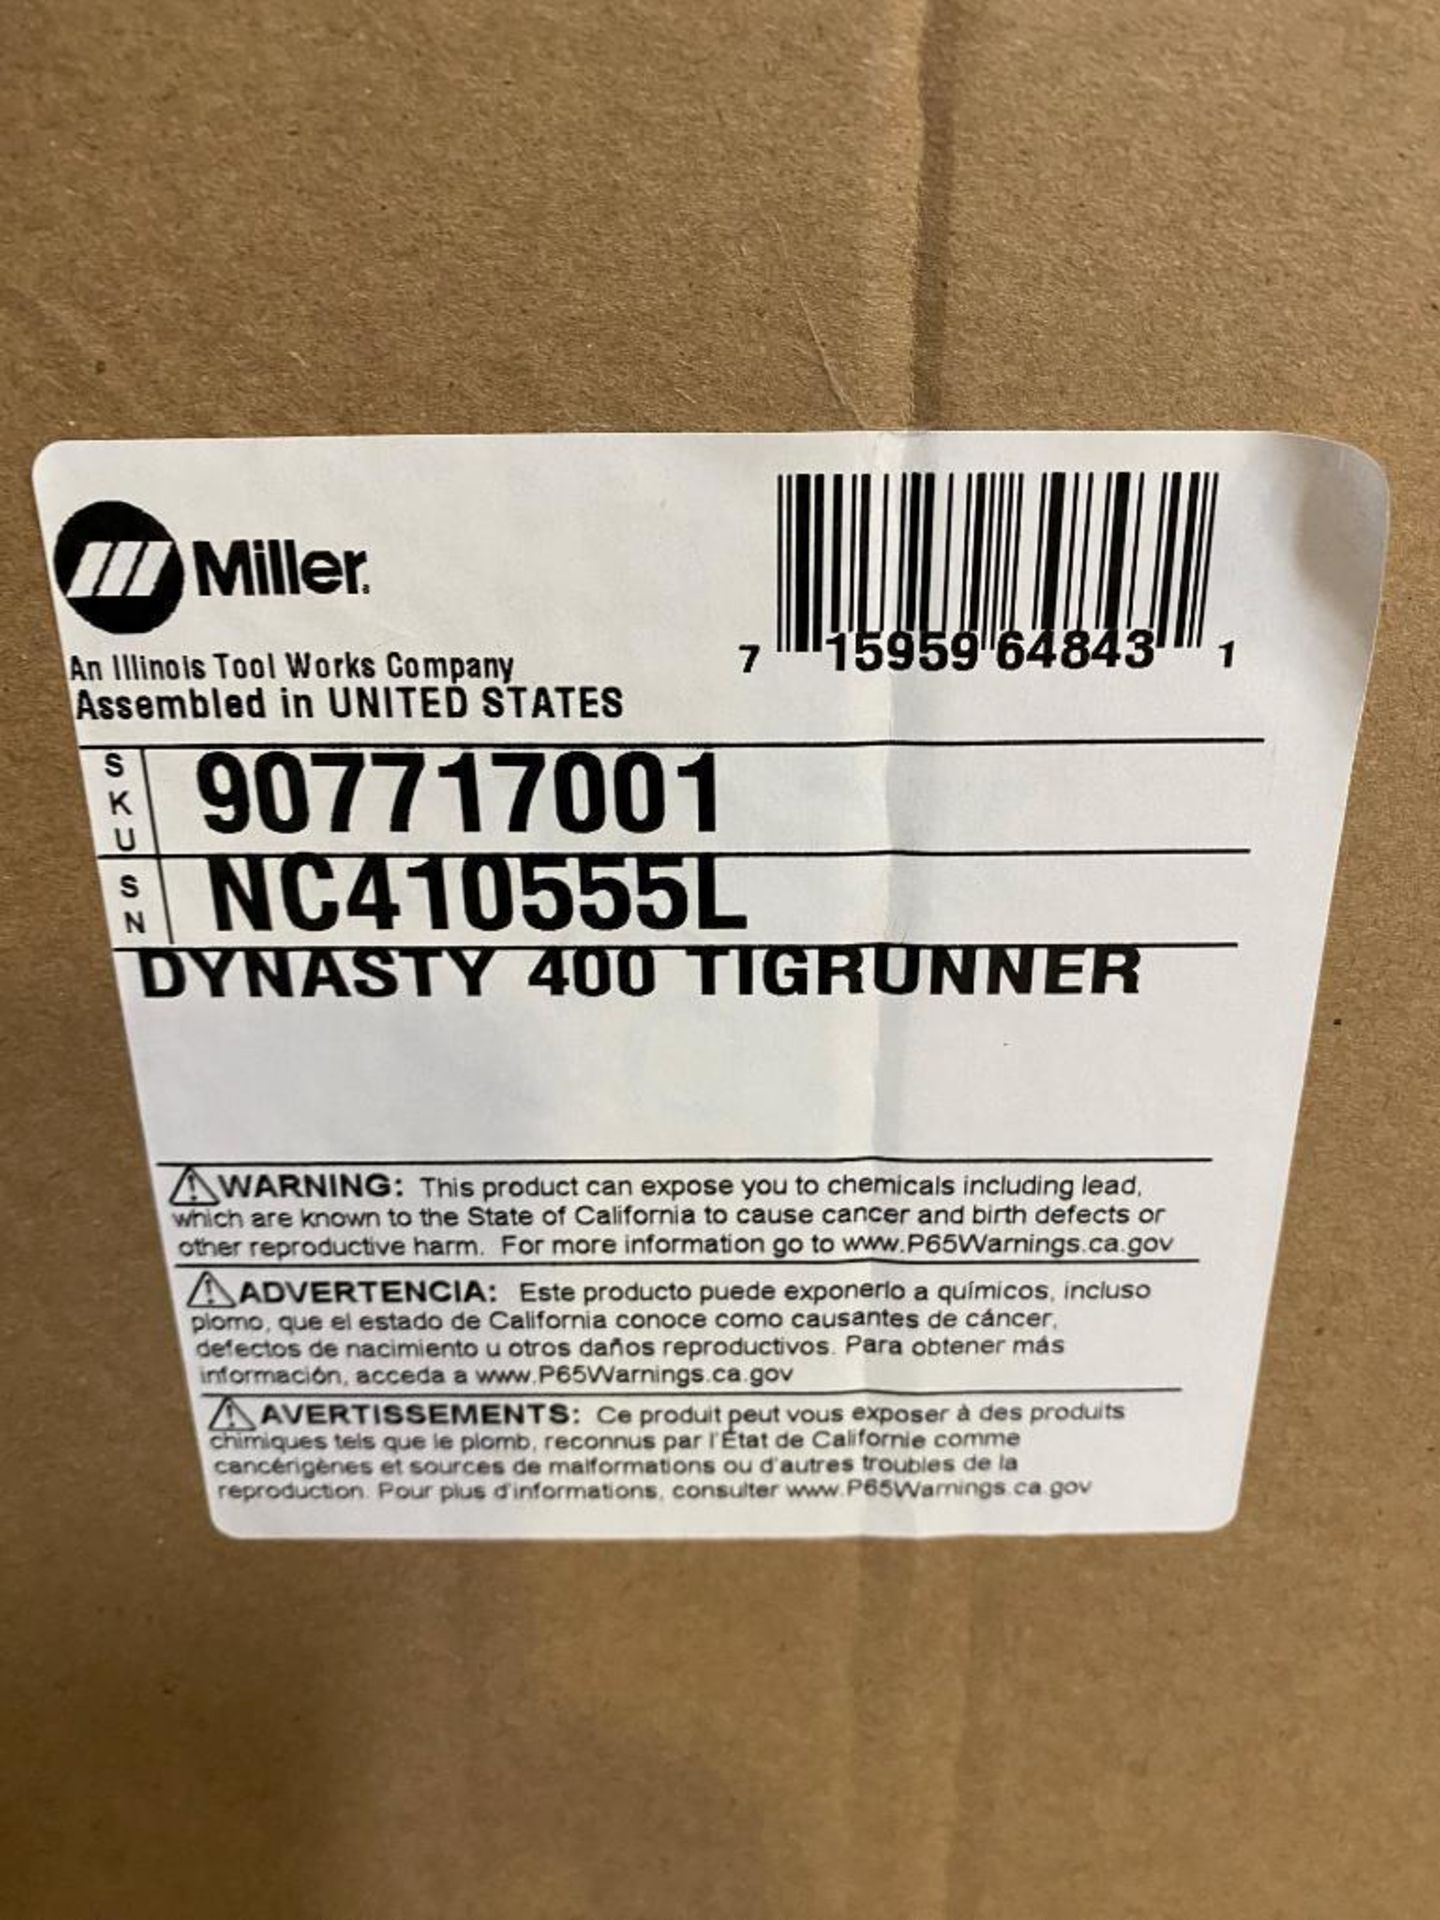 Miller Dynasty 400 Tigrunner TIG Welder (New), Model 907717001, S/N NC410555L, w/ Coolmate 3.5, & Ca - Image 6 of 6